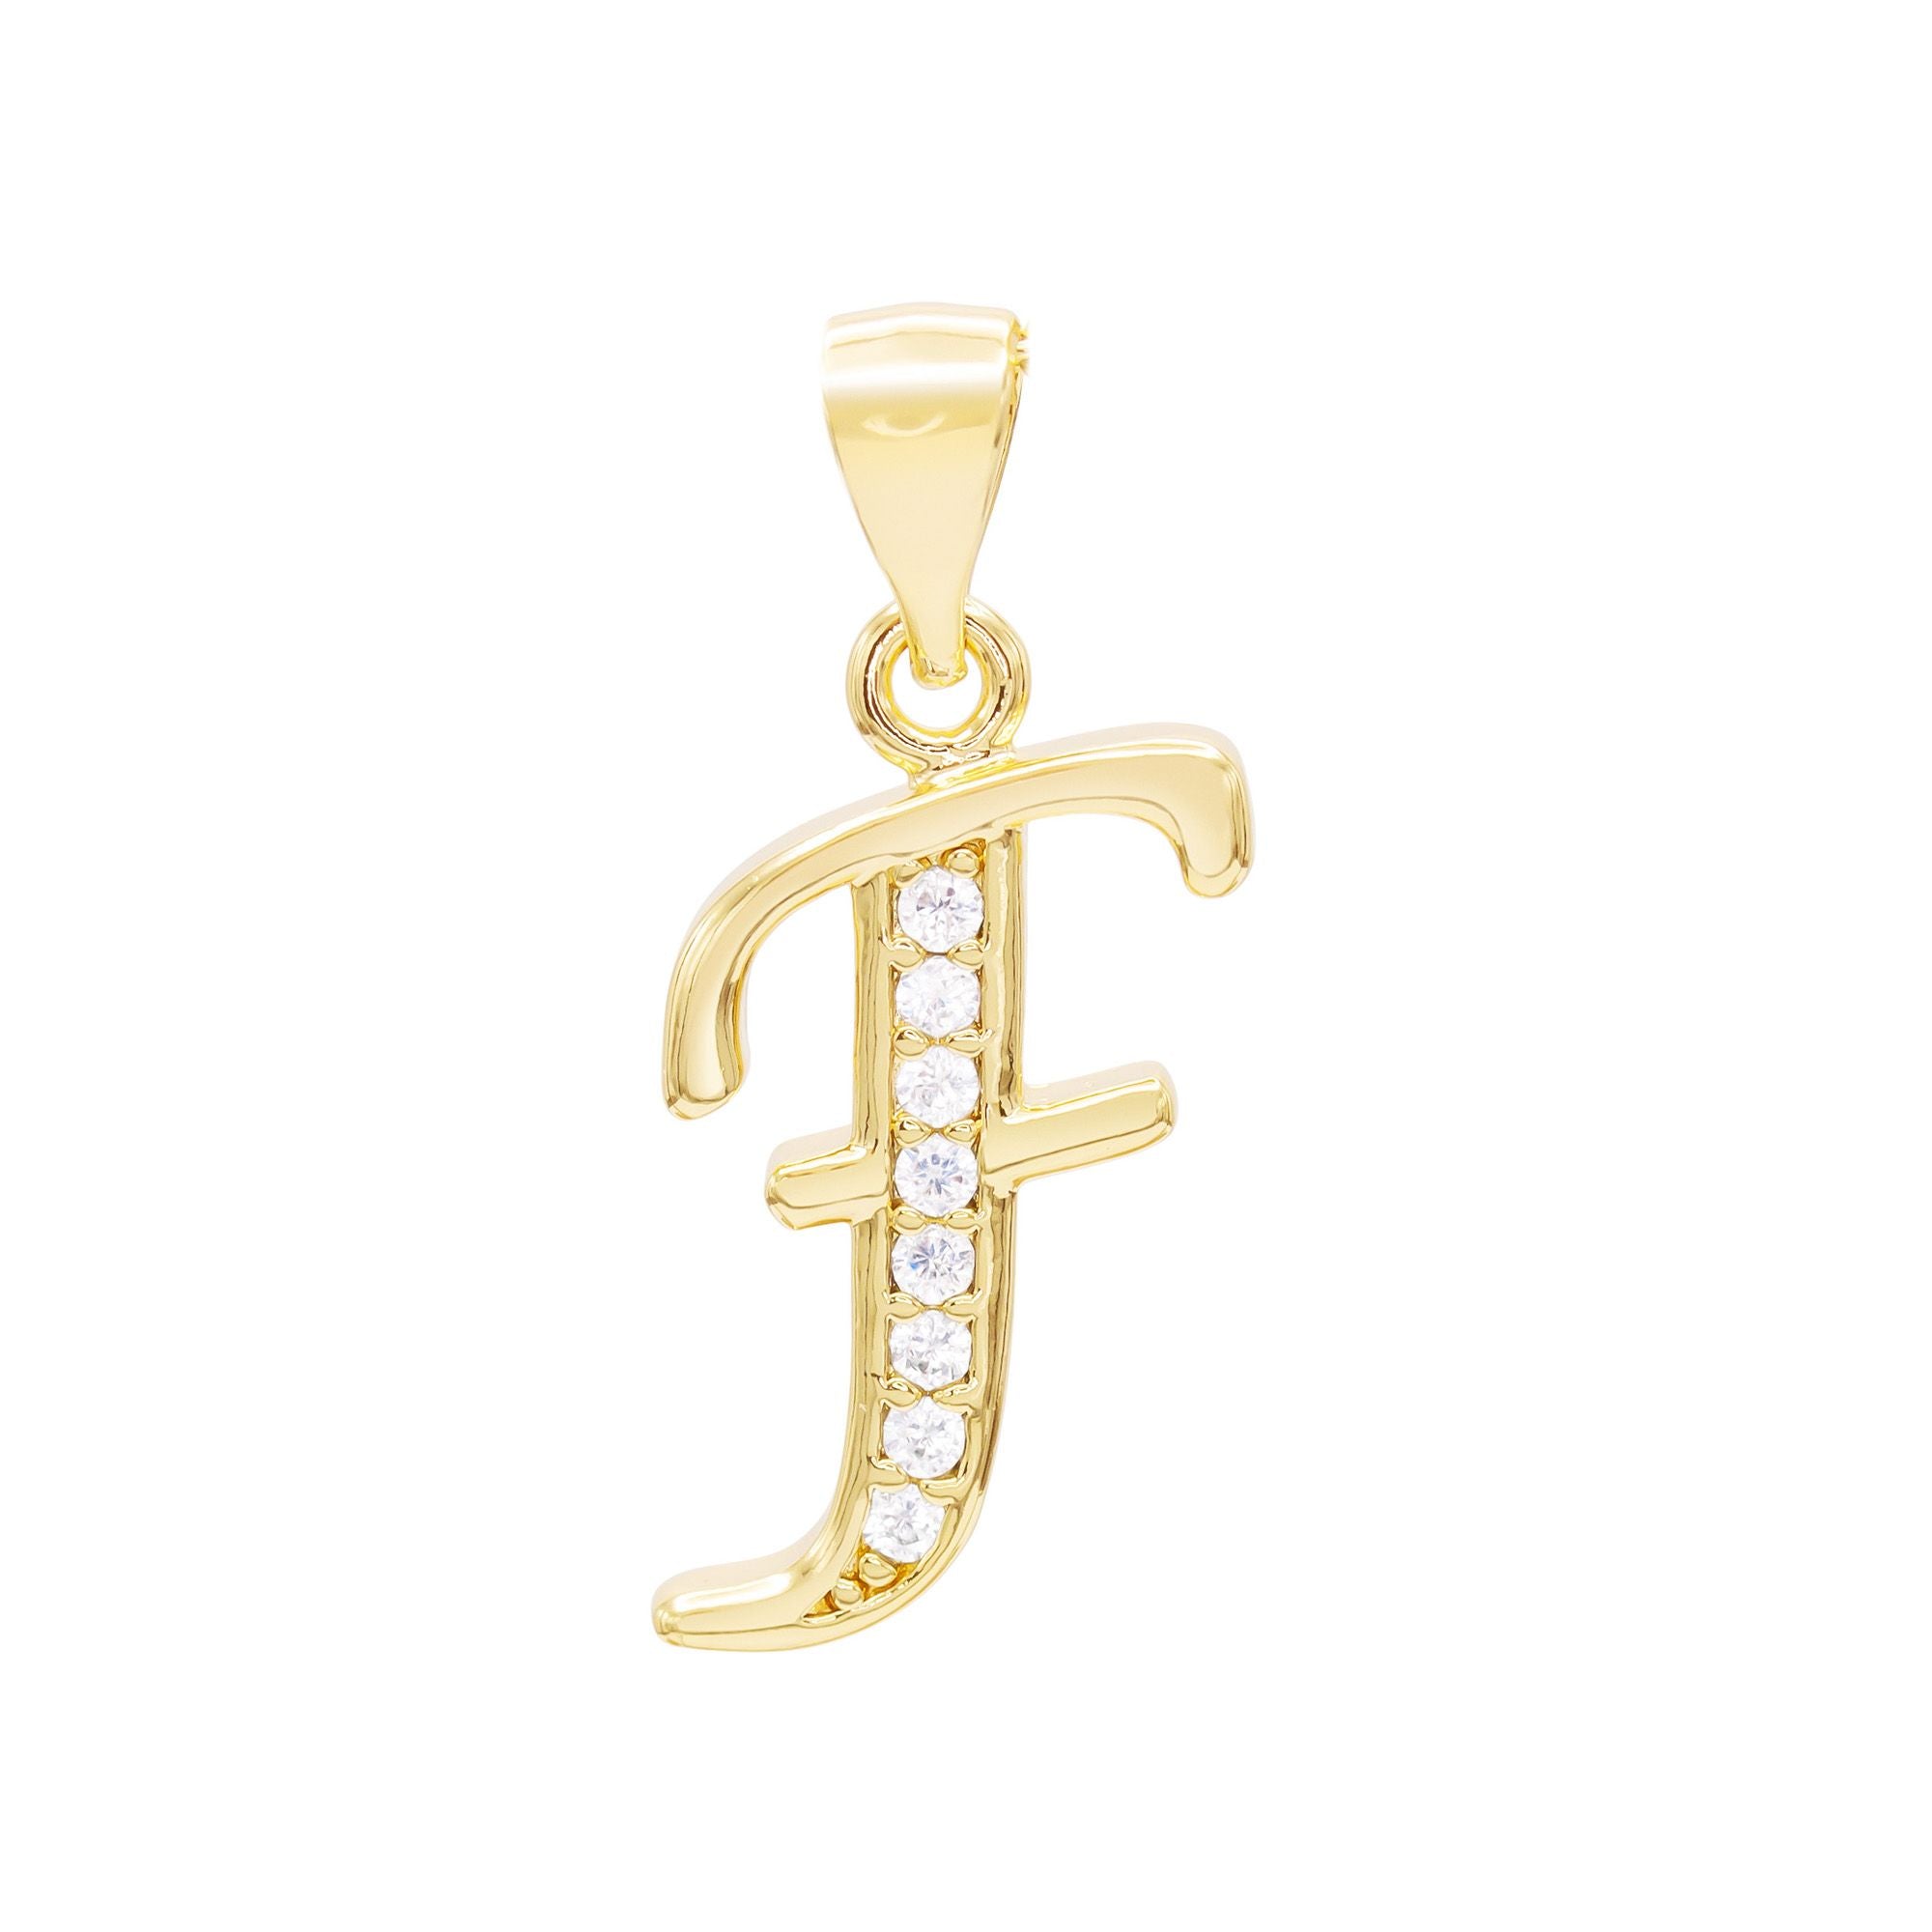 L 14K Anklet Bracelet Gold Filled Cubic Zirconia Charm Figaro Foot Chain Set 10 Charm